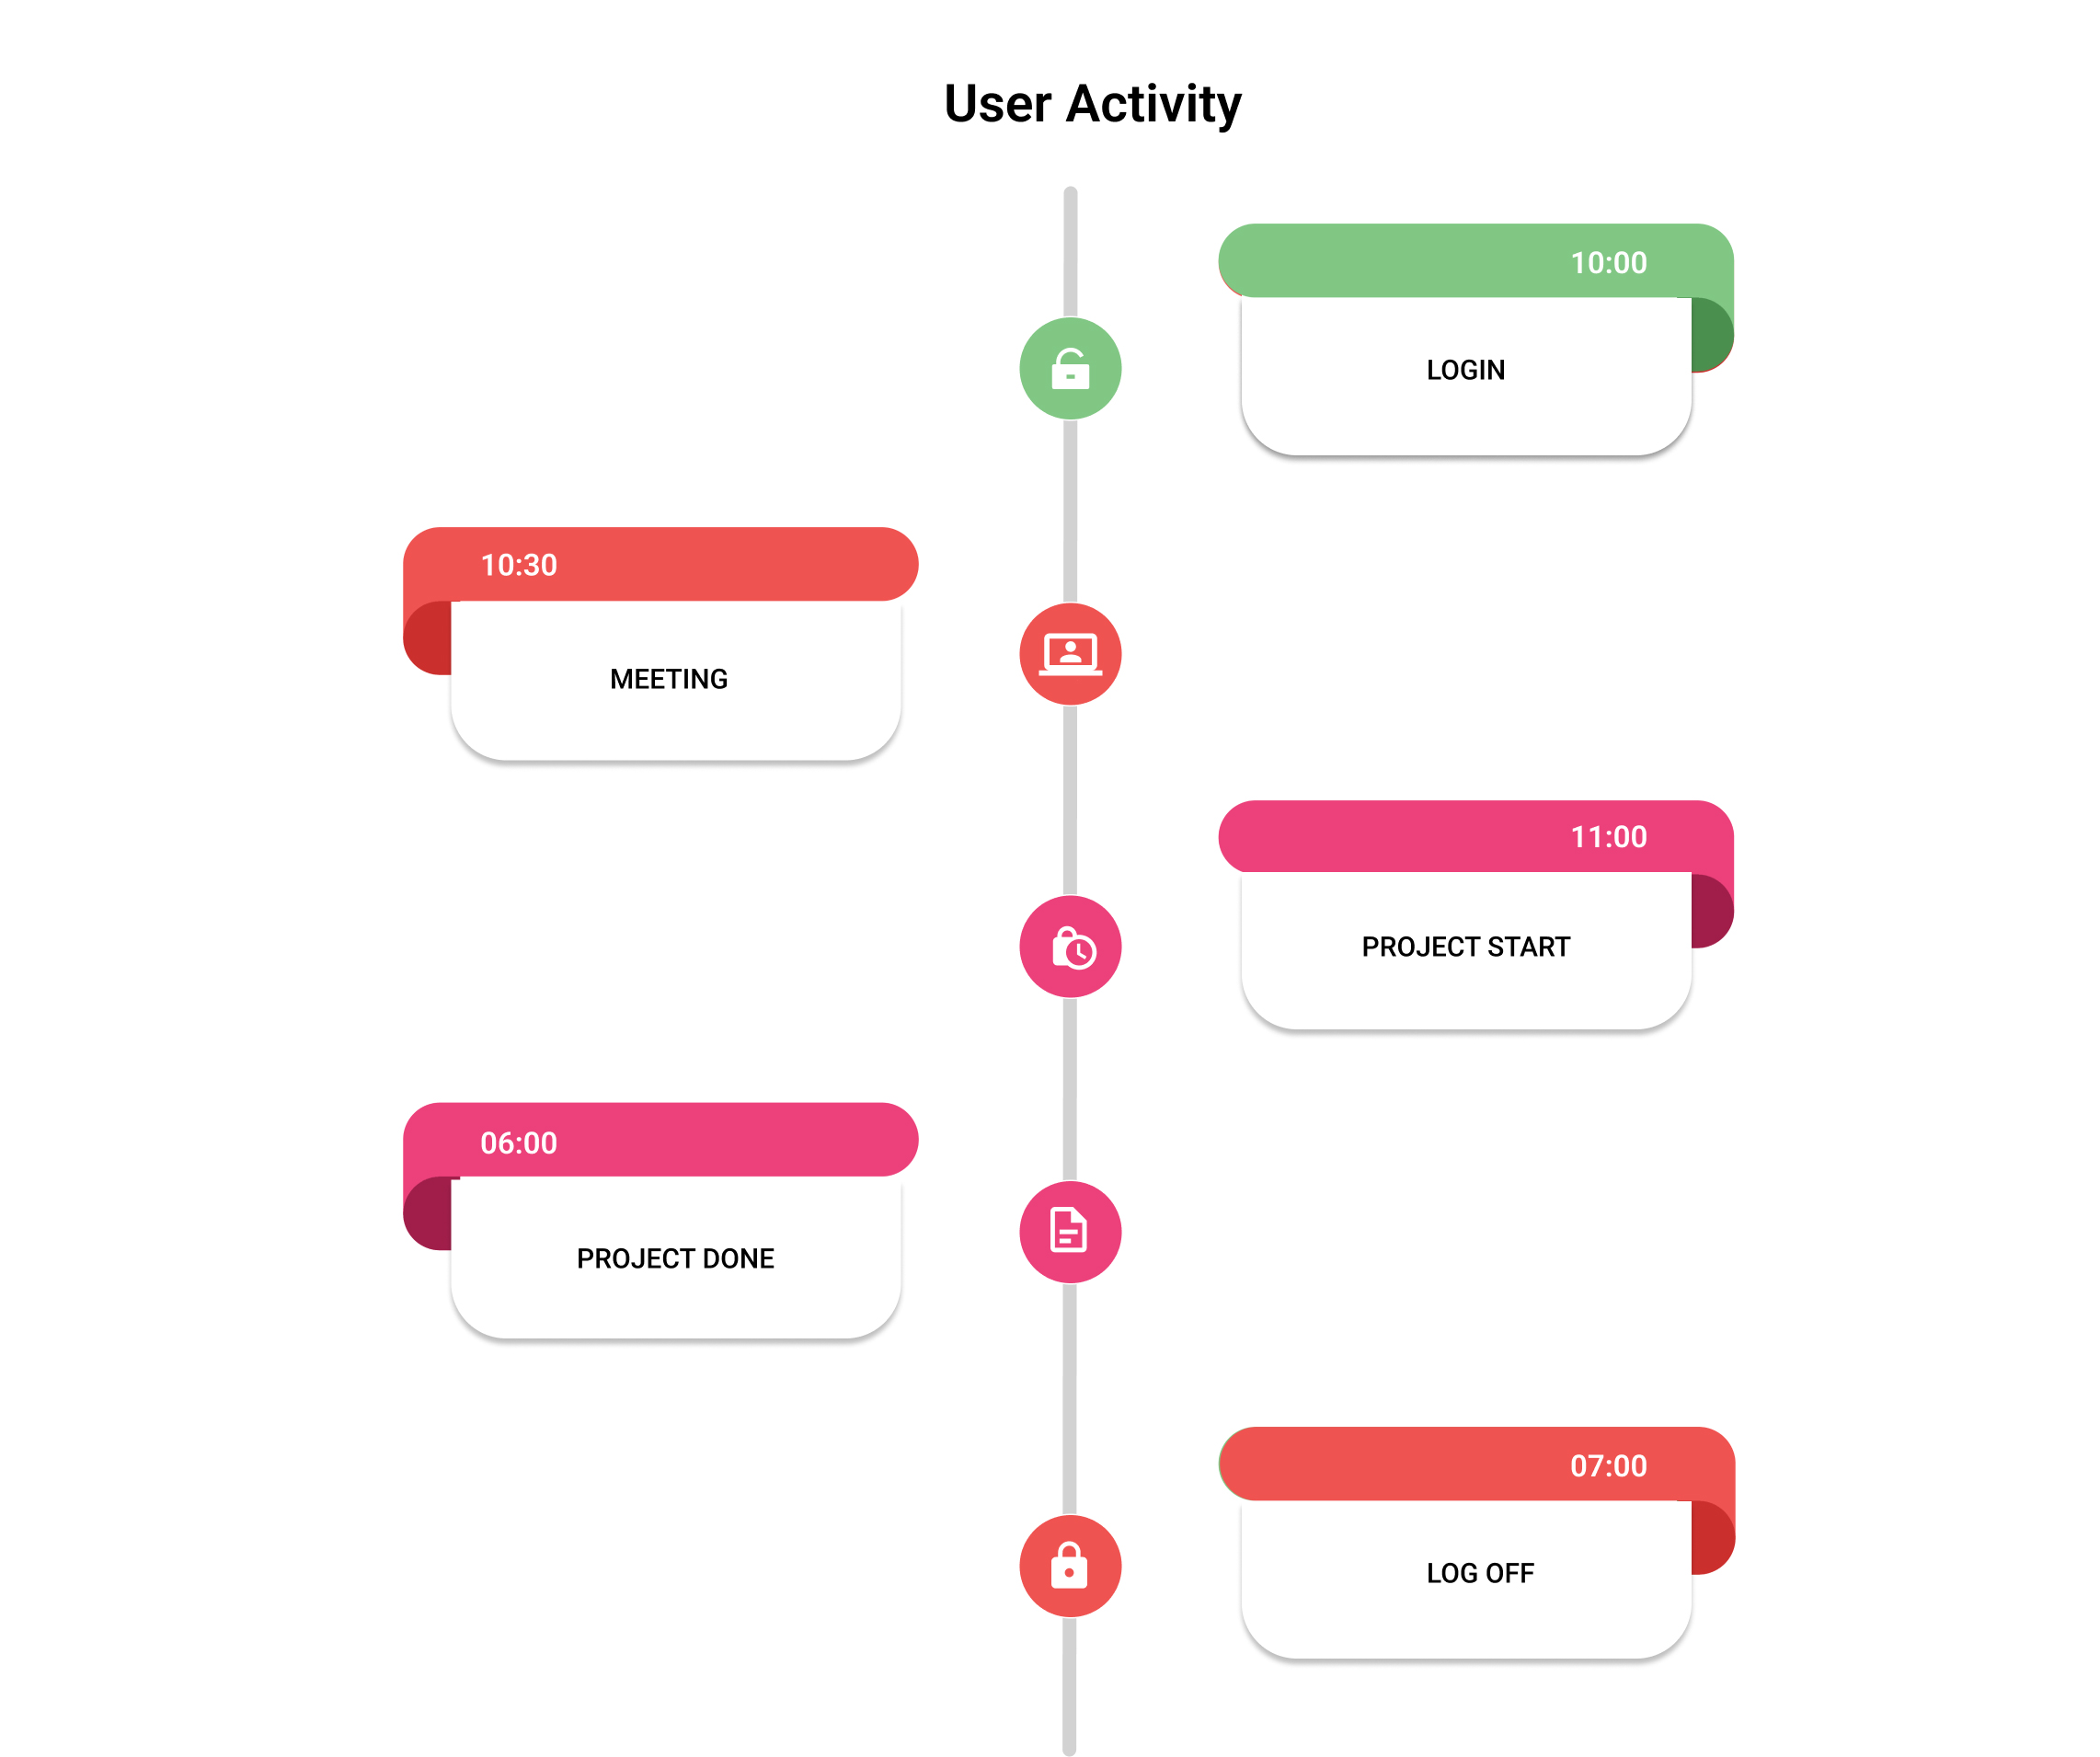 User Activity
